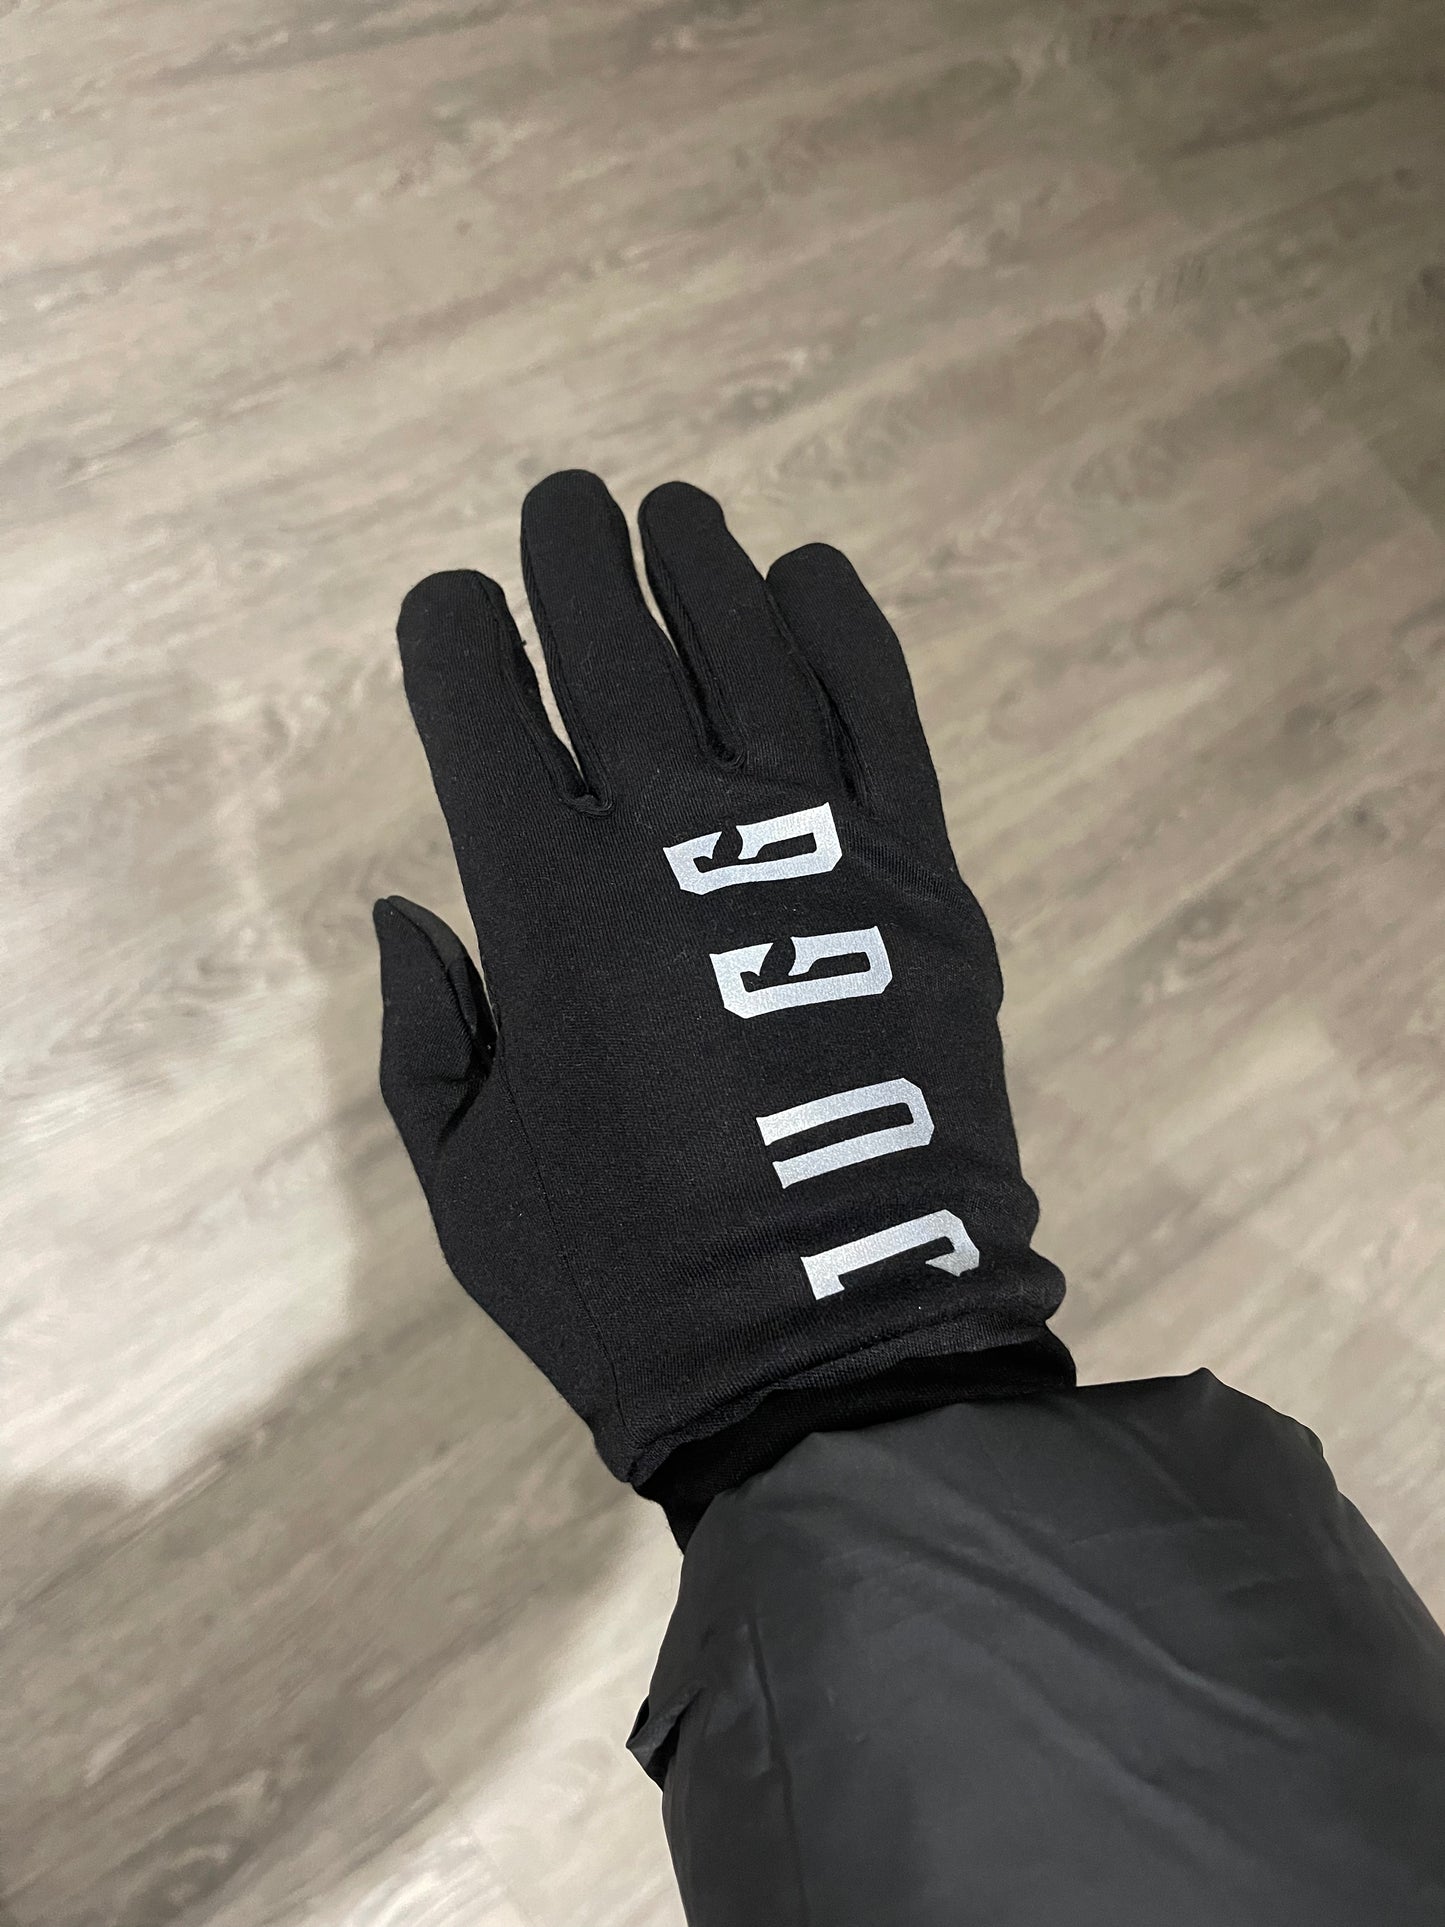 Igloo Gloves - Black